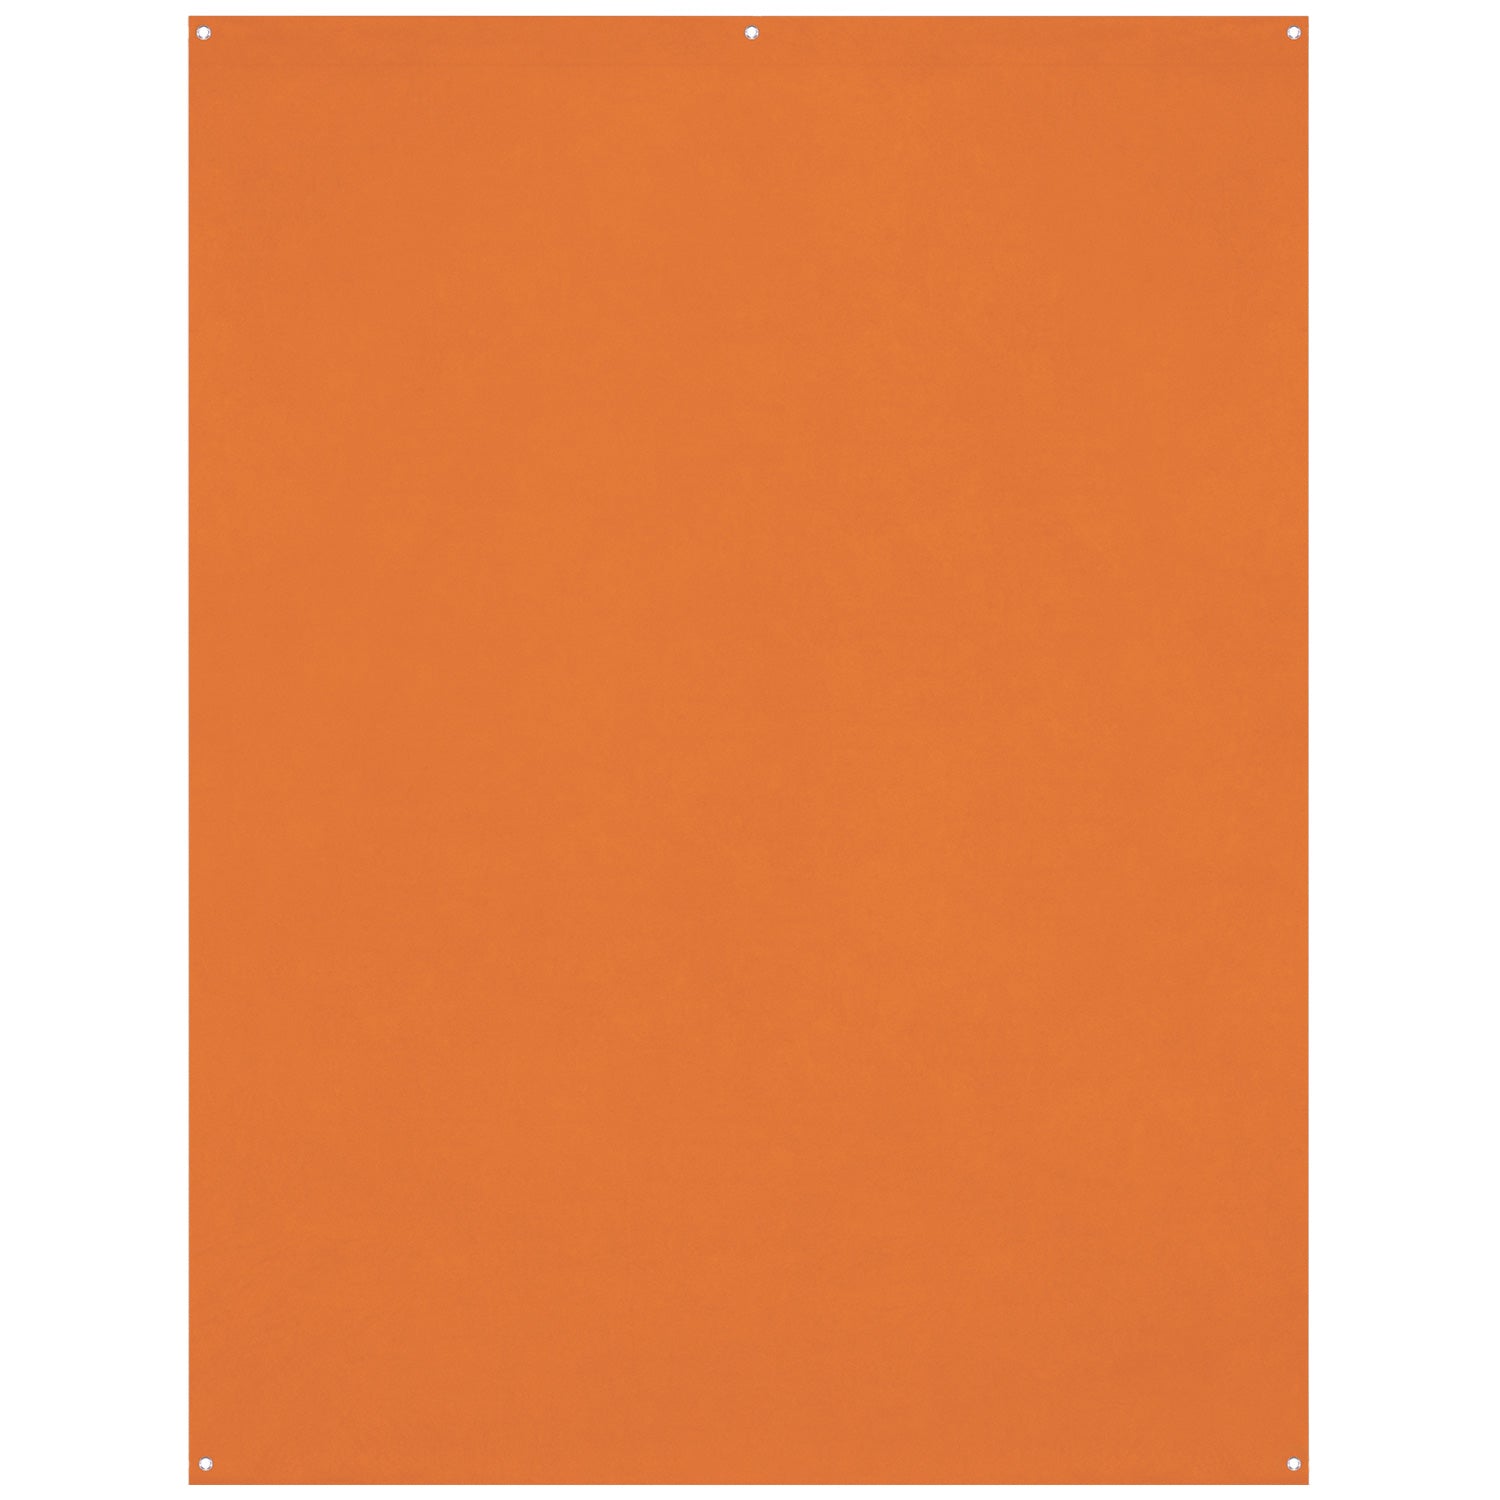 X-Drop Wrinkle-Resistant Backdrop - Tiger Orange (5' x 7')